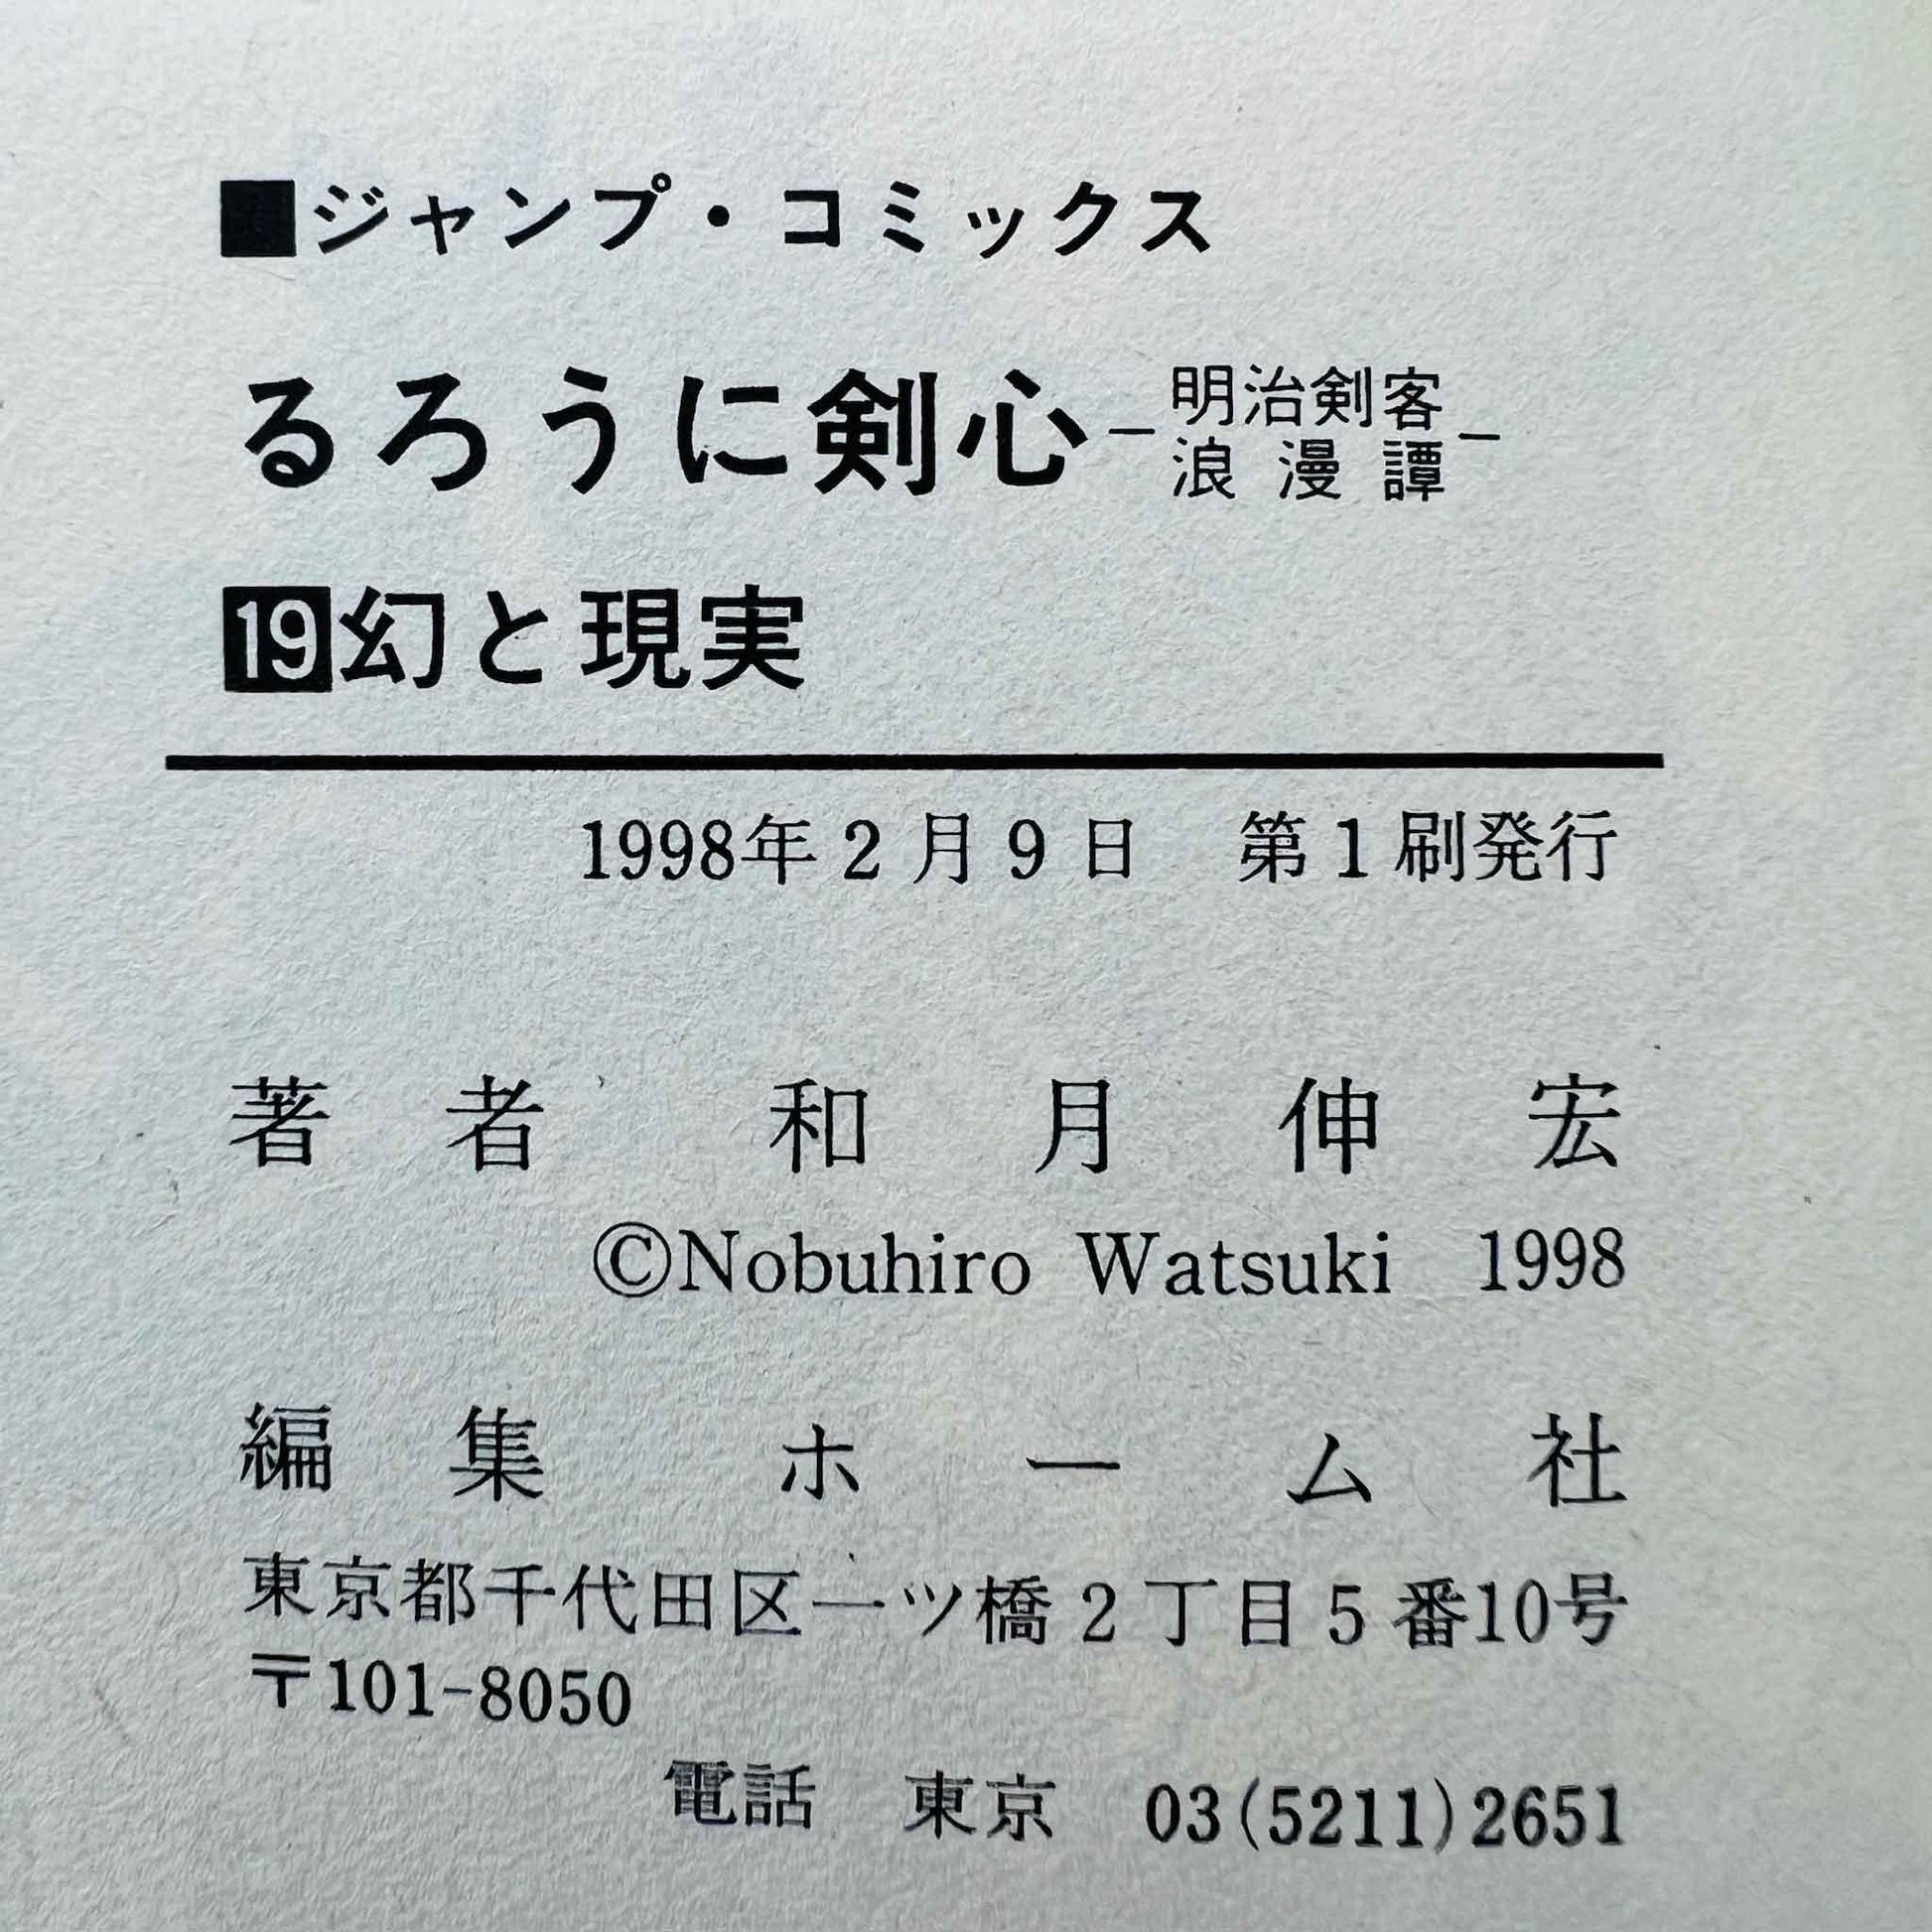 Rurouni Kenshin - Volume 19 - 1stPrint.net - 1st First Print Edition Manga Store - M-KENSH-19-001